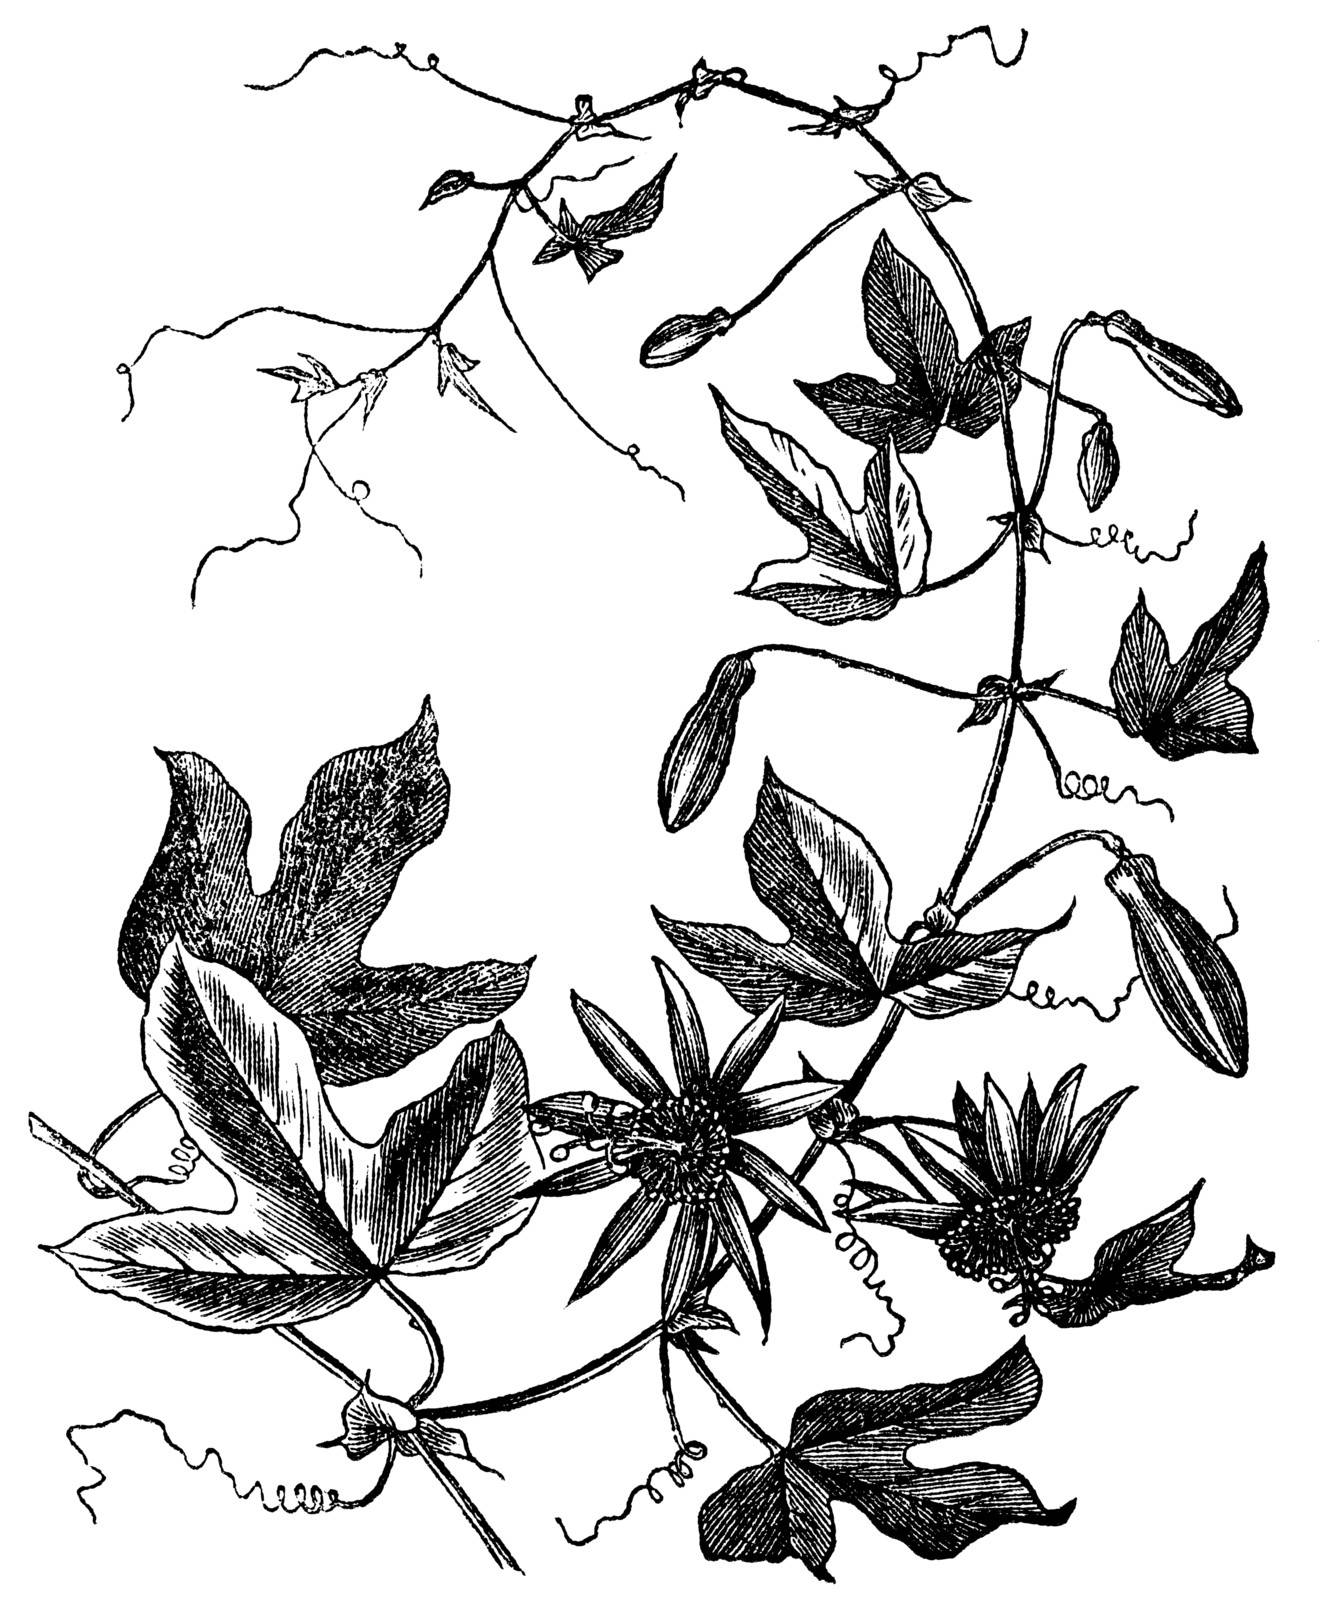 Passion Flower or Passiflora caerulea, vintage engraved illustration. Trousset encyclopedia (1886 - 1891).